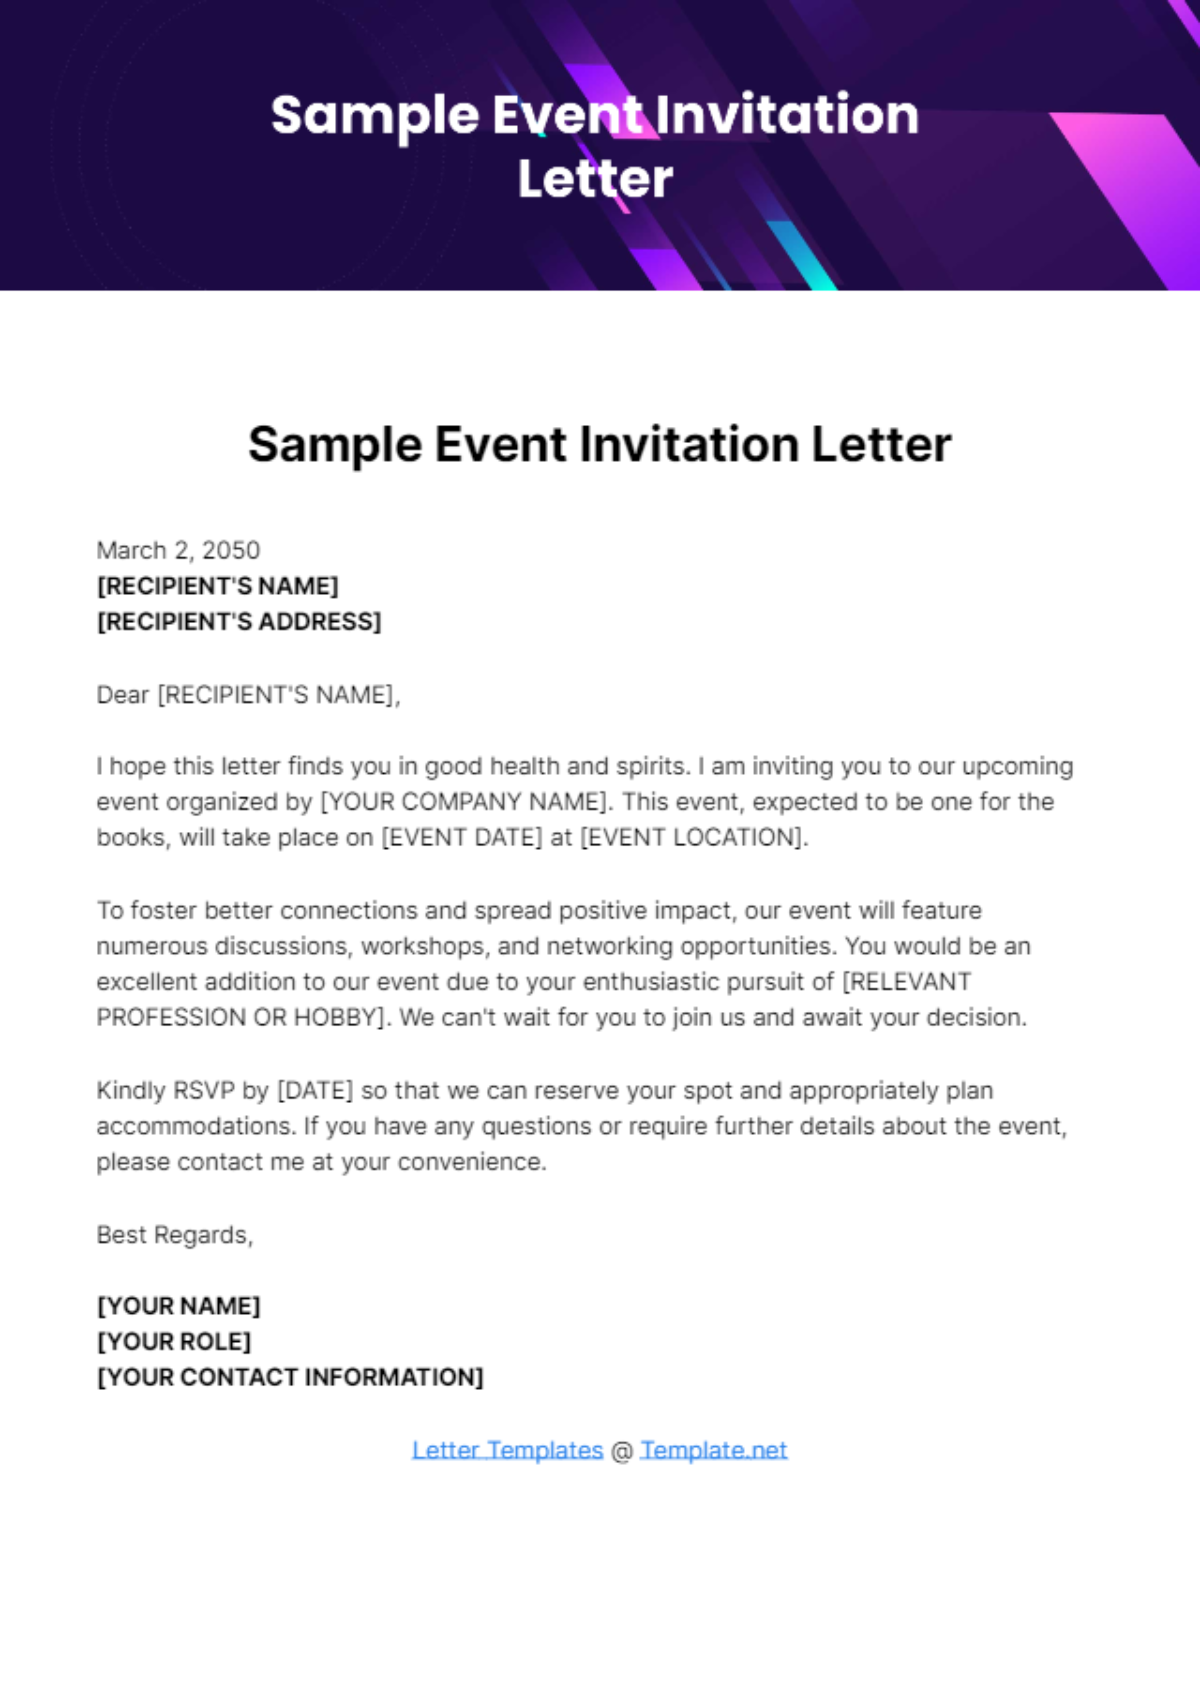 Free Sample Event Invitation Letter Template